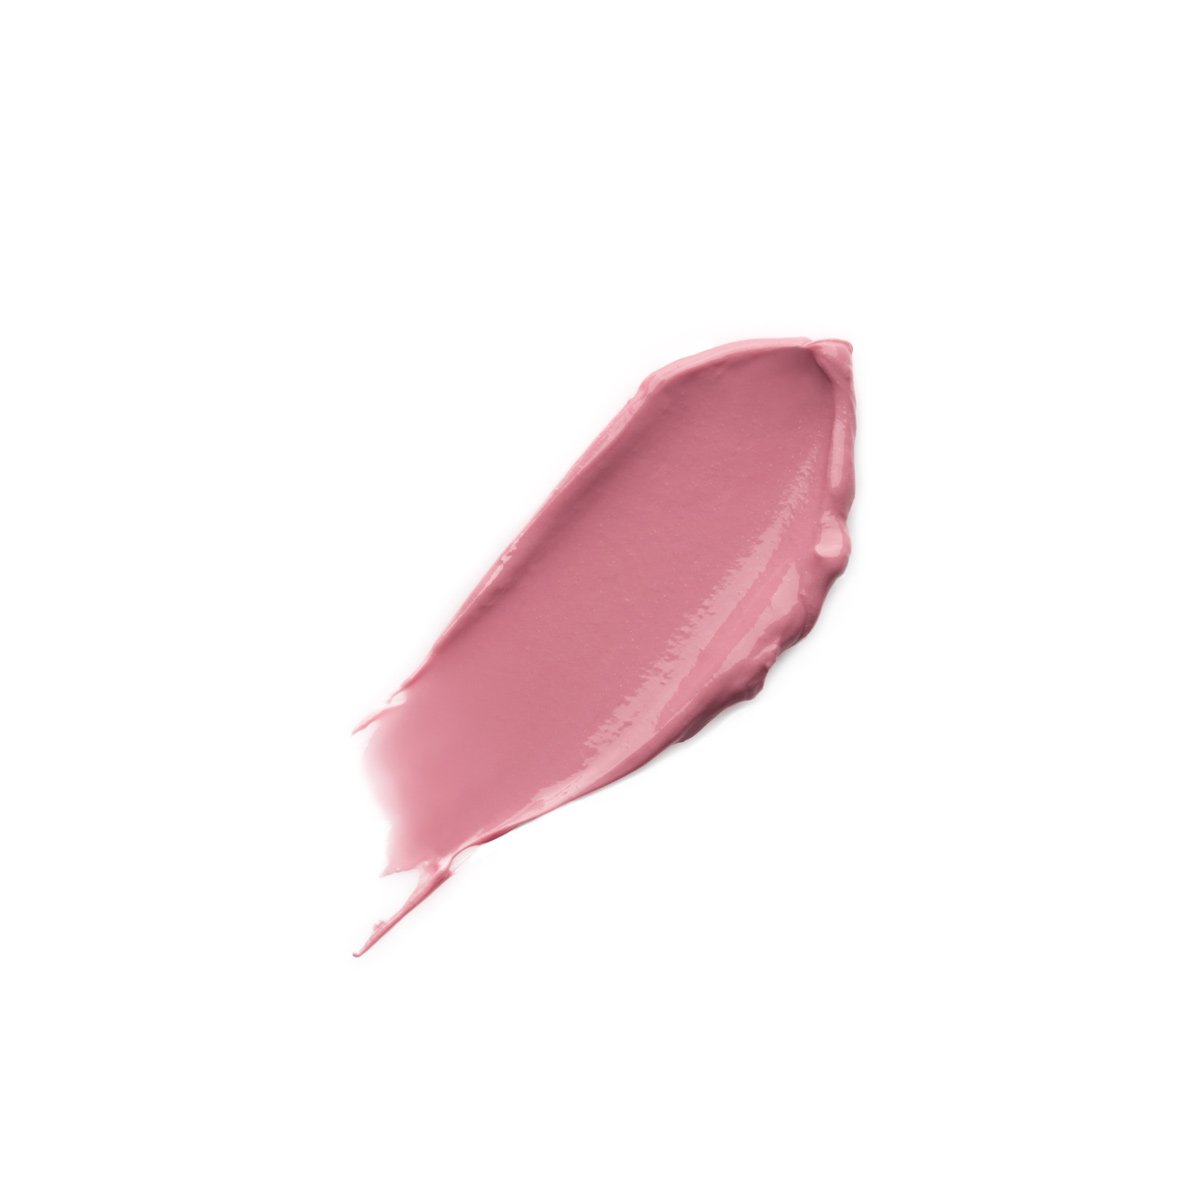 CHUCHOTER - PINKY BEIGE - pinky beige pink lipstick lip balm